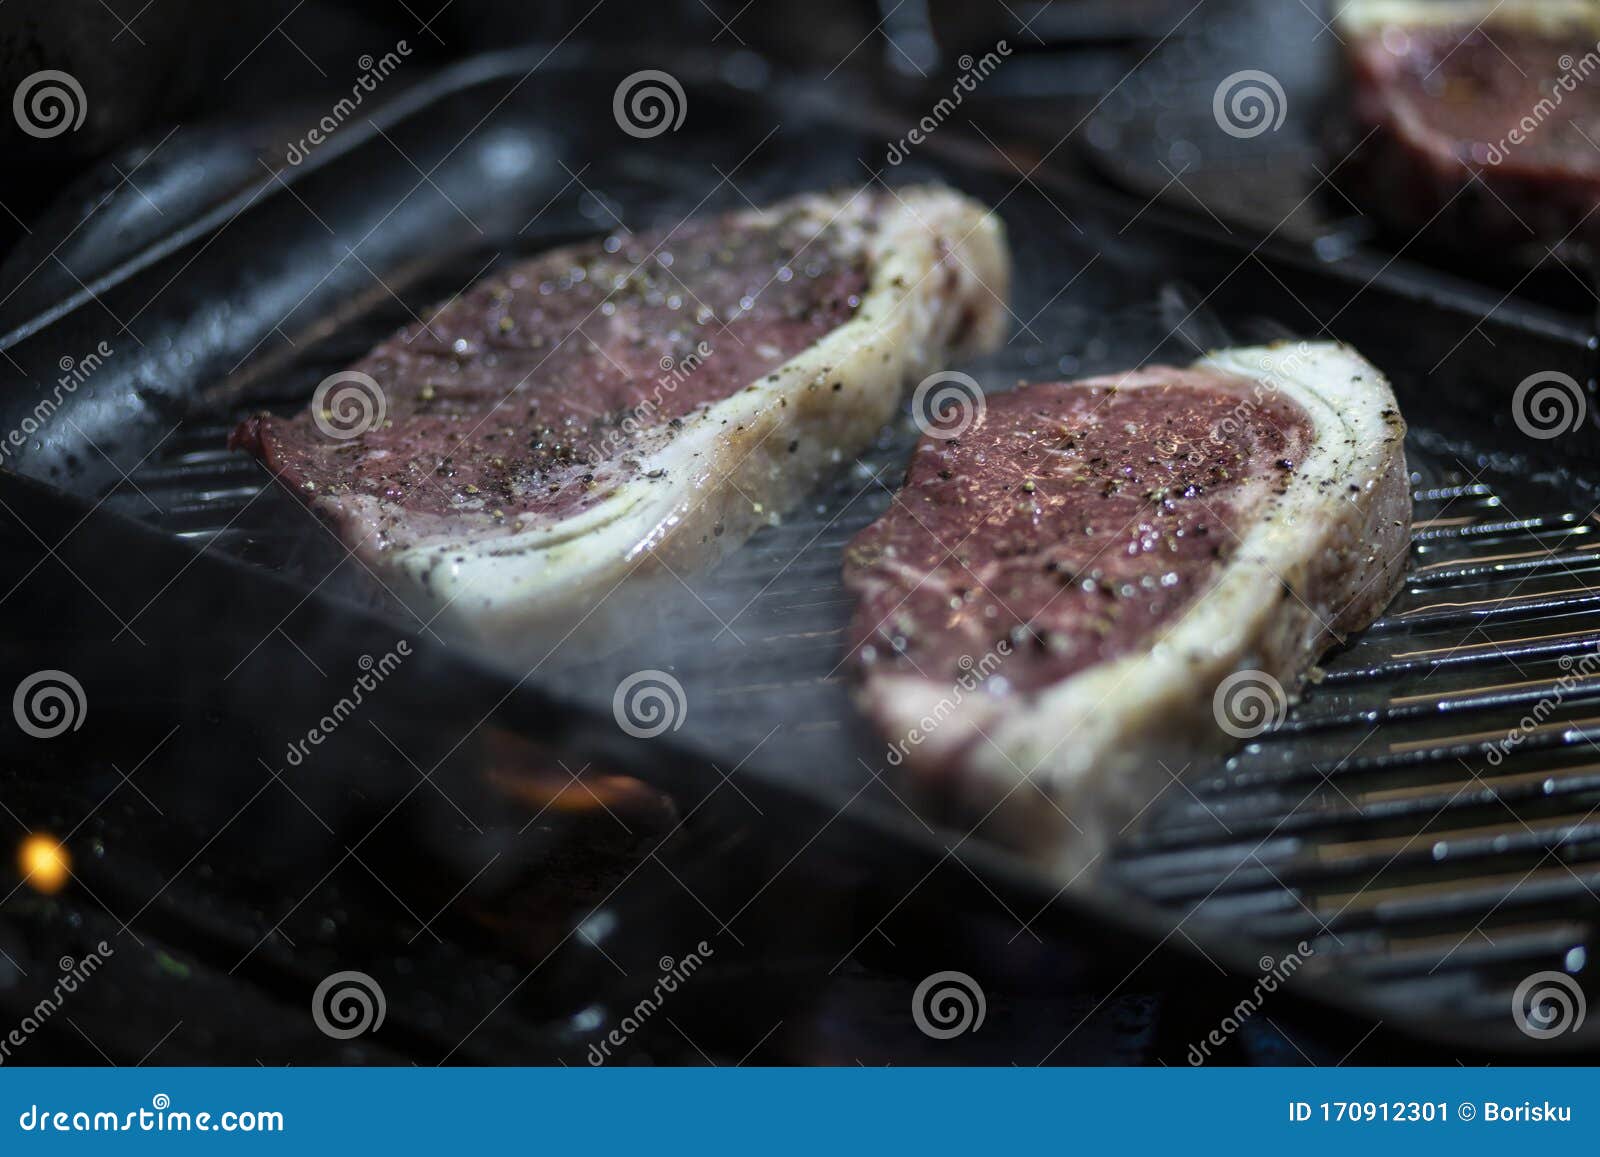 red meat preparetion